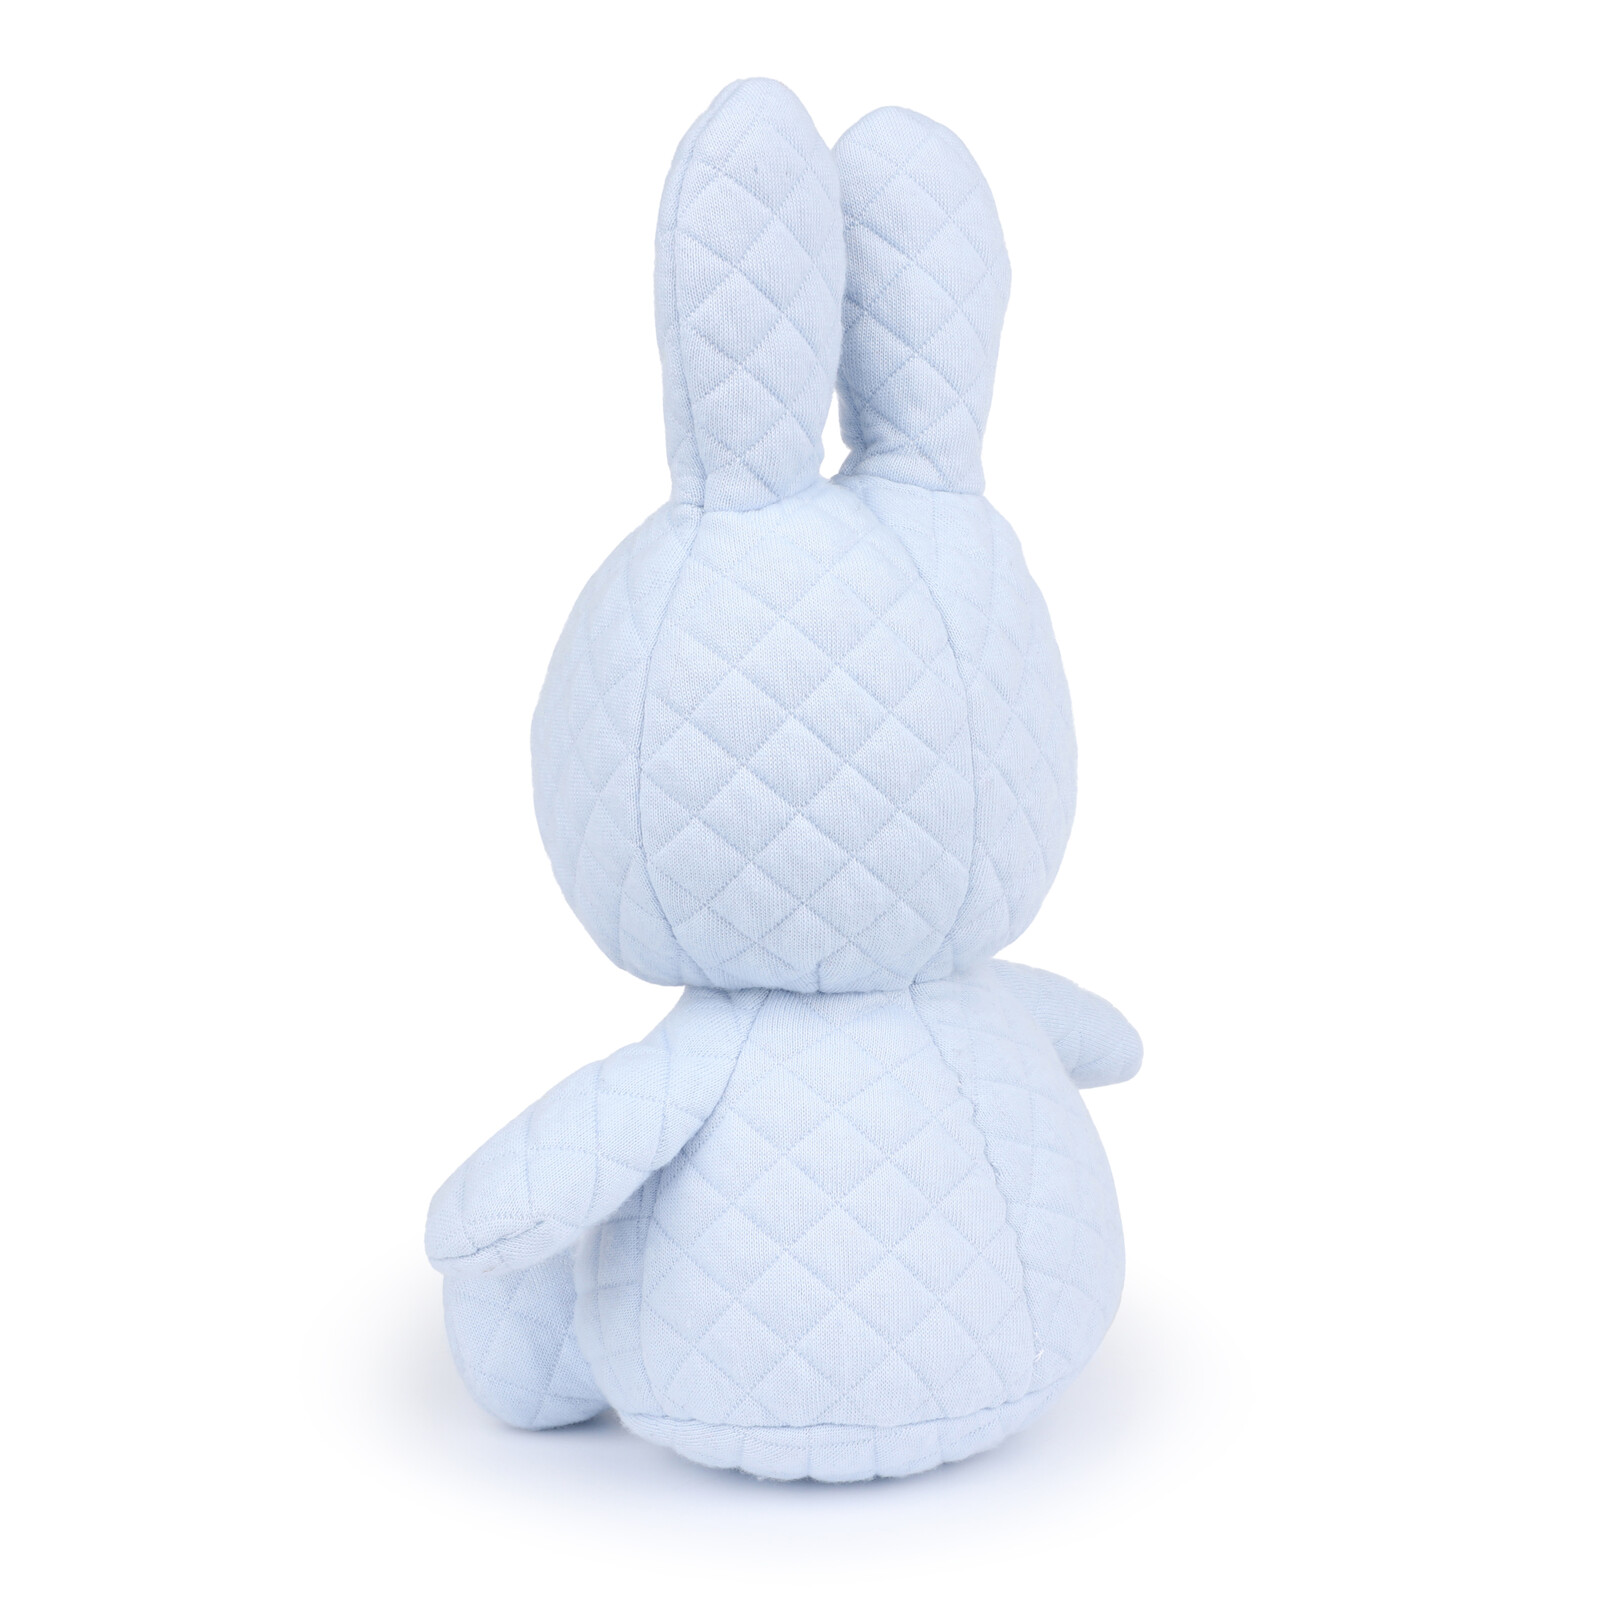 Bonbon Miffy Sitting Blue in giftbox - 23 cm - 9"